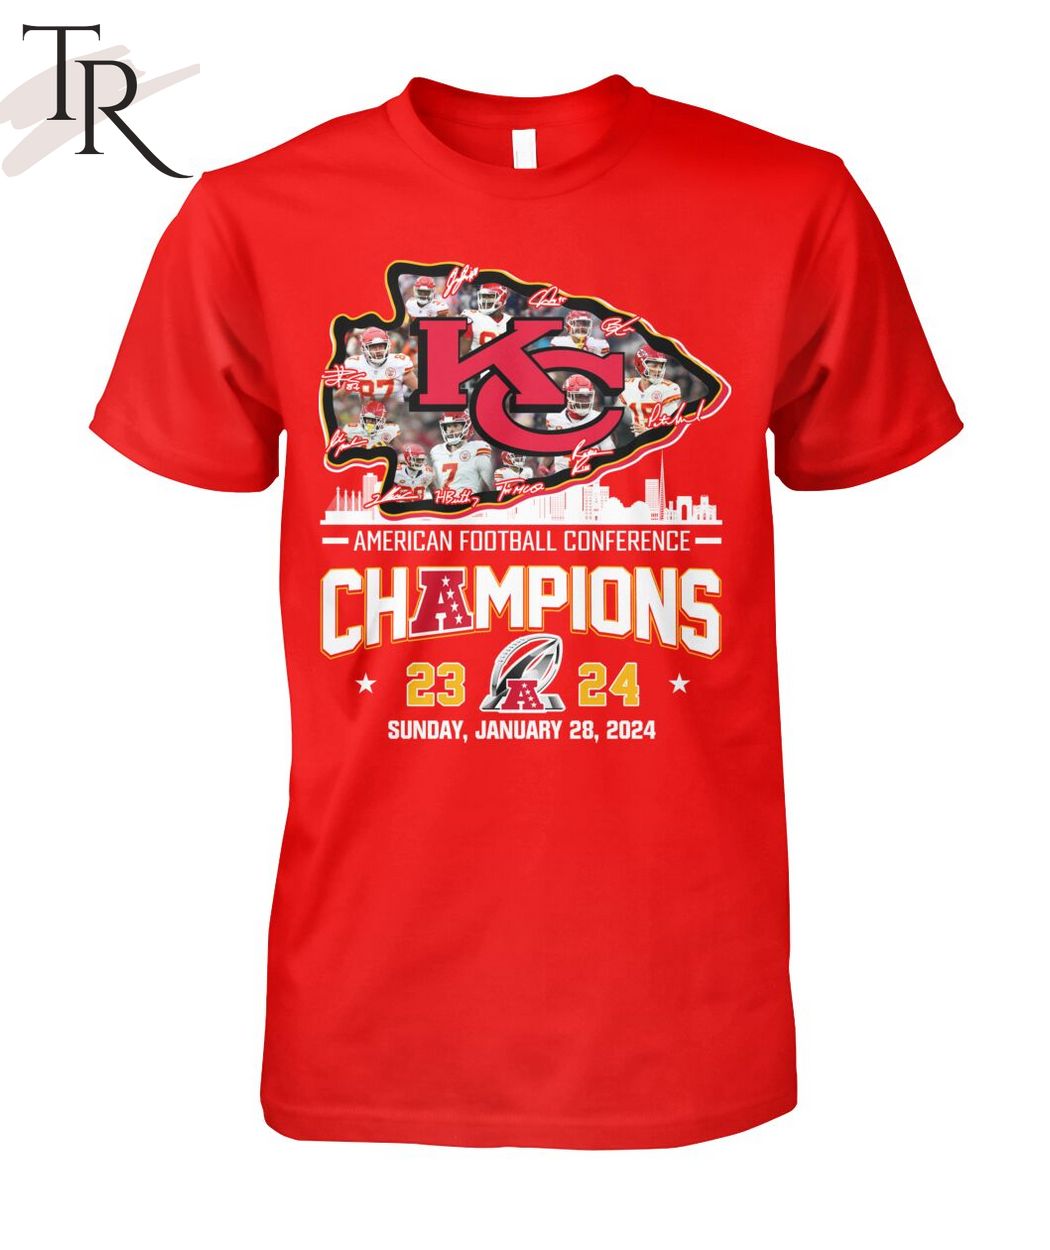 Kansas City Chiefs American Football Conference Champions 23 24 Sunday, January 28, 2024 T-Shirt